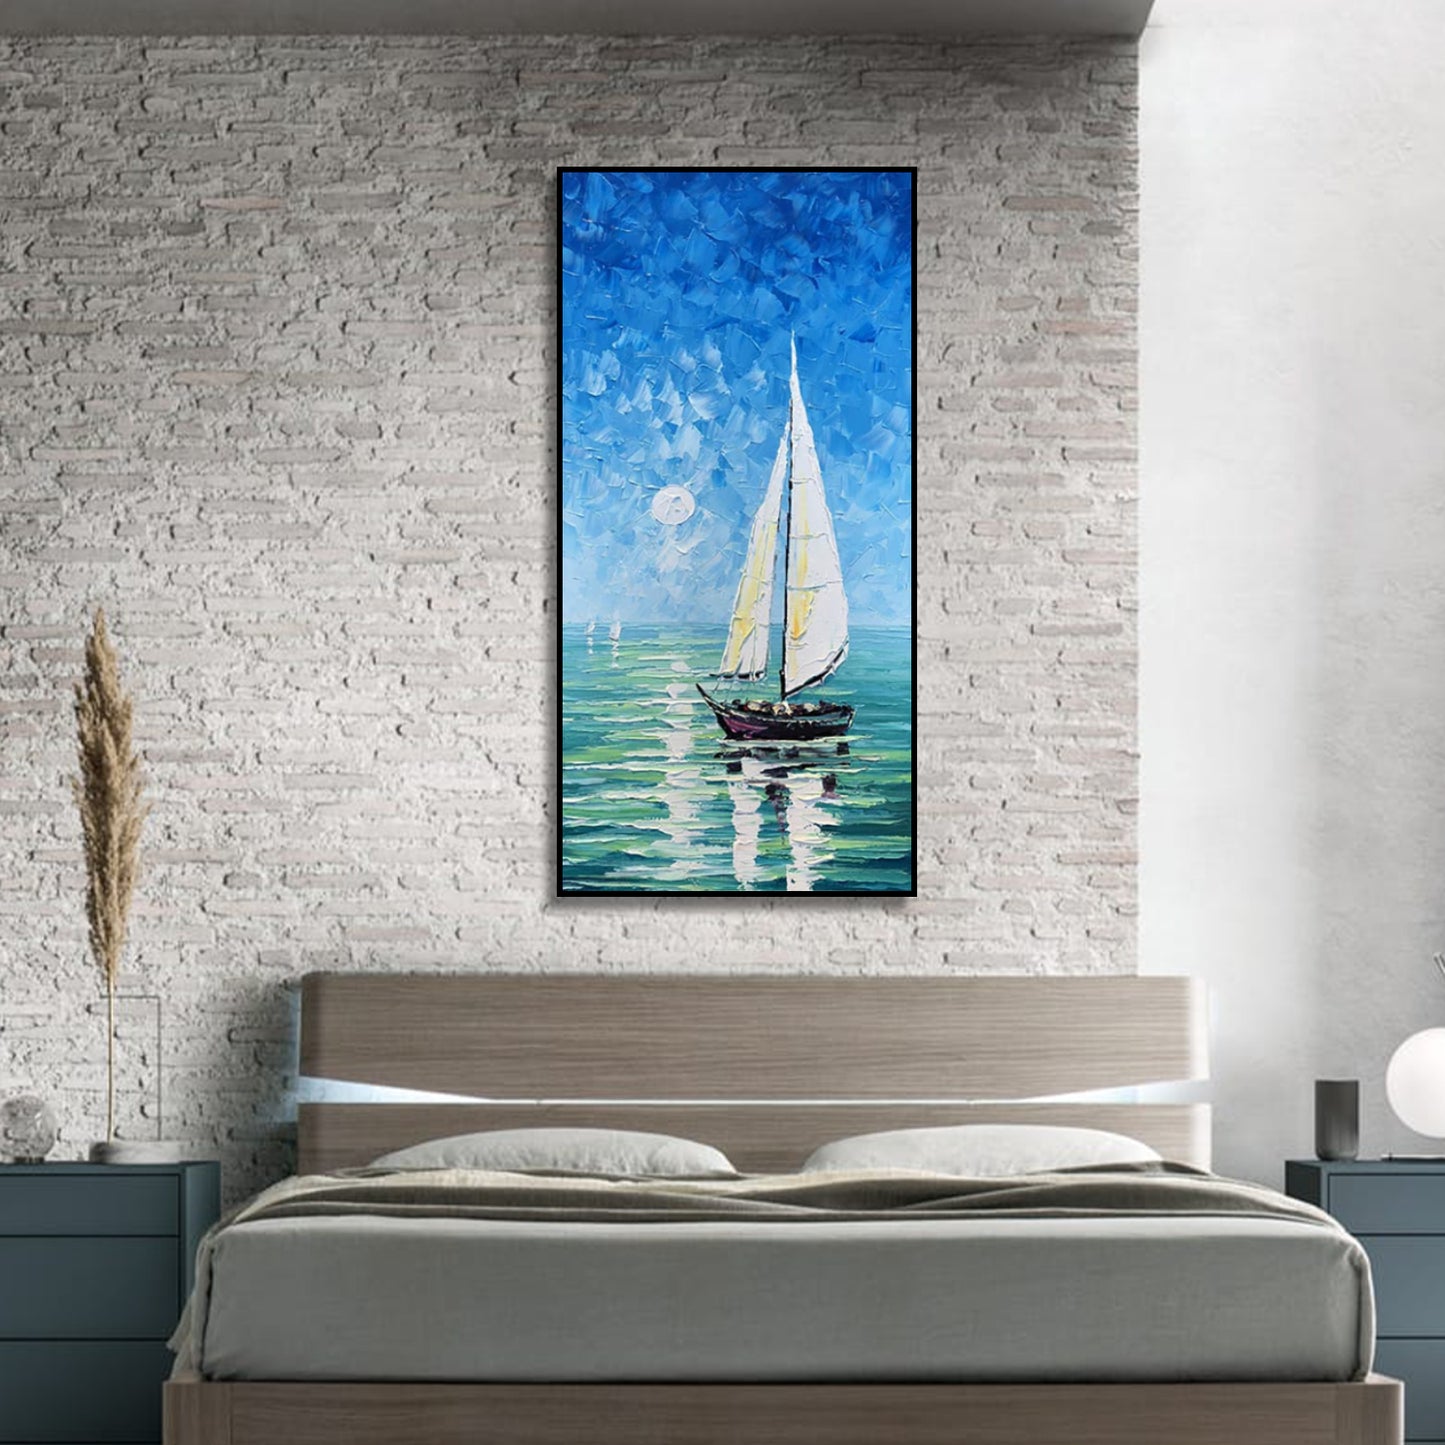 Tranquil Moonlight Sailboat Textured Blue Sea Wall Art